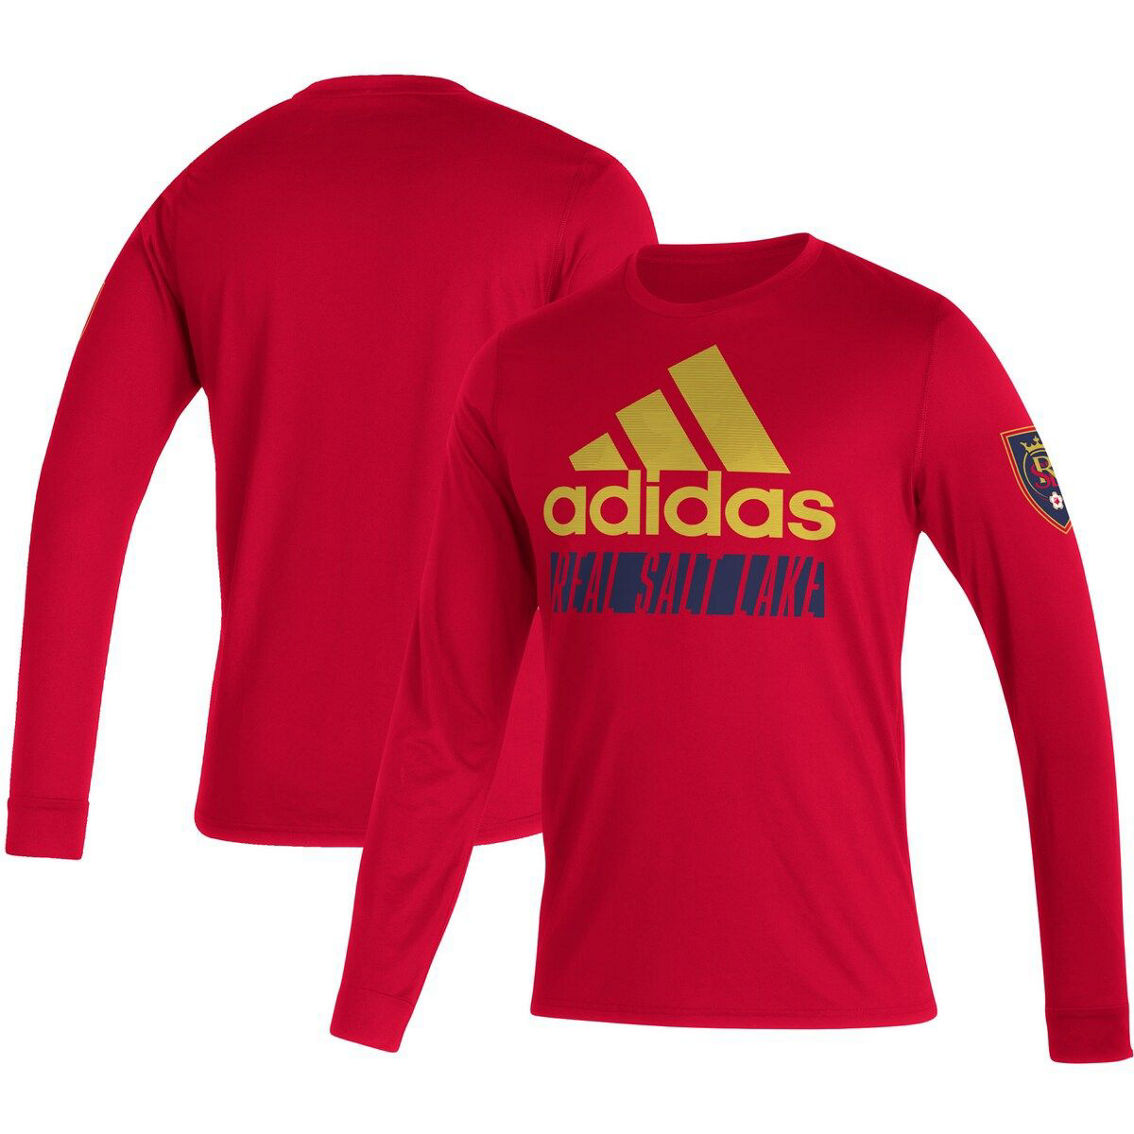 adidas Men's Red Real Salt Lake Vintage Performance Long Sleeve T-Shirt - Image 2 of 4